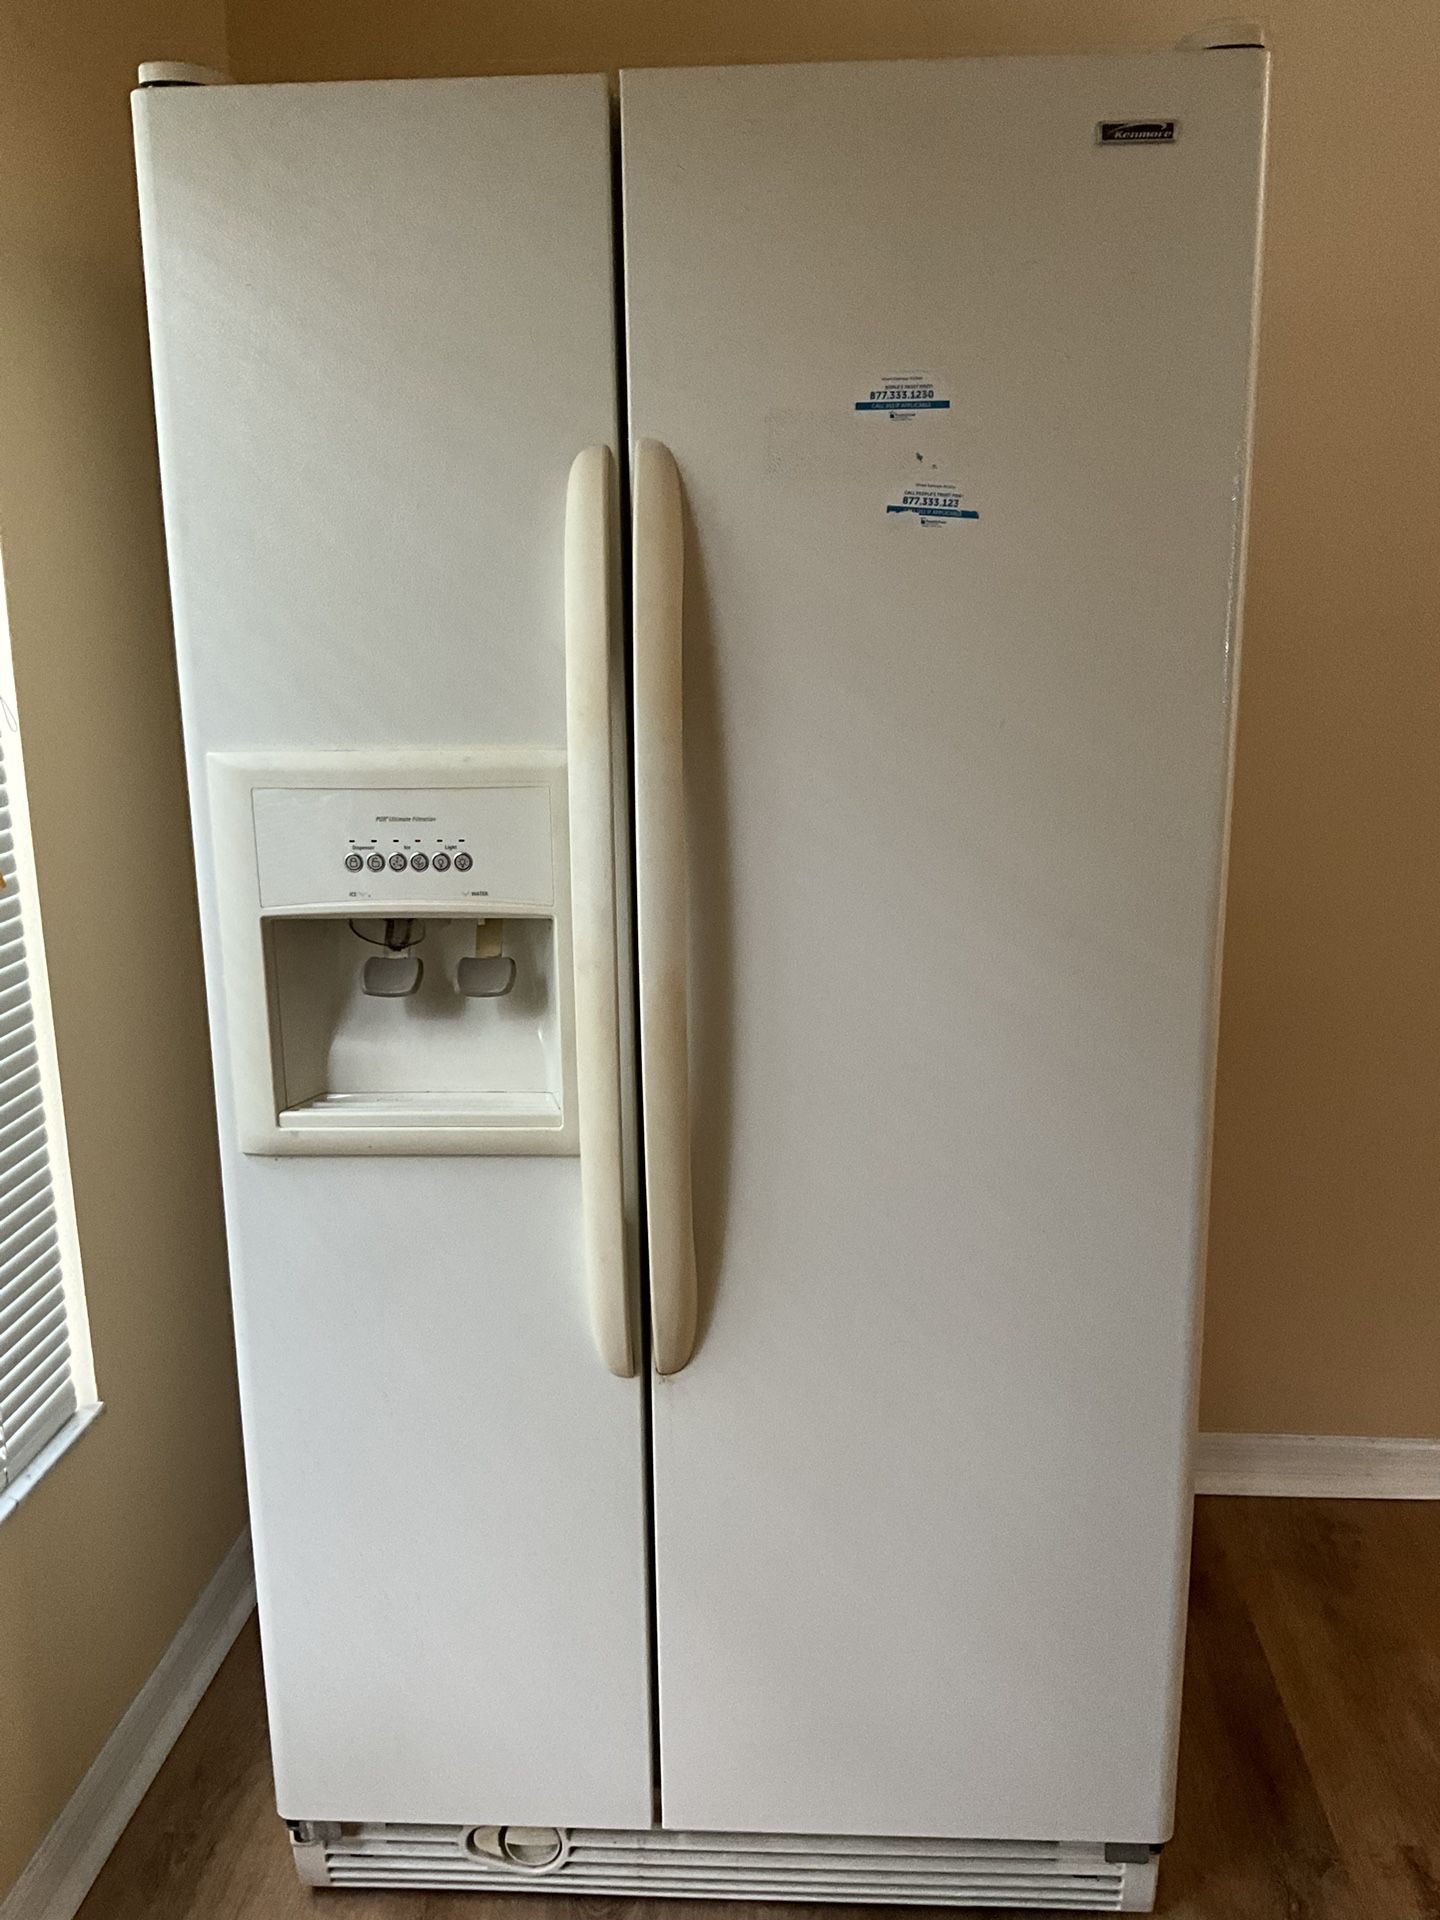 Refrigerator On Sale -$100